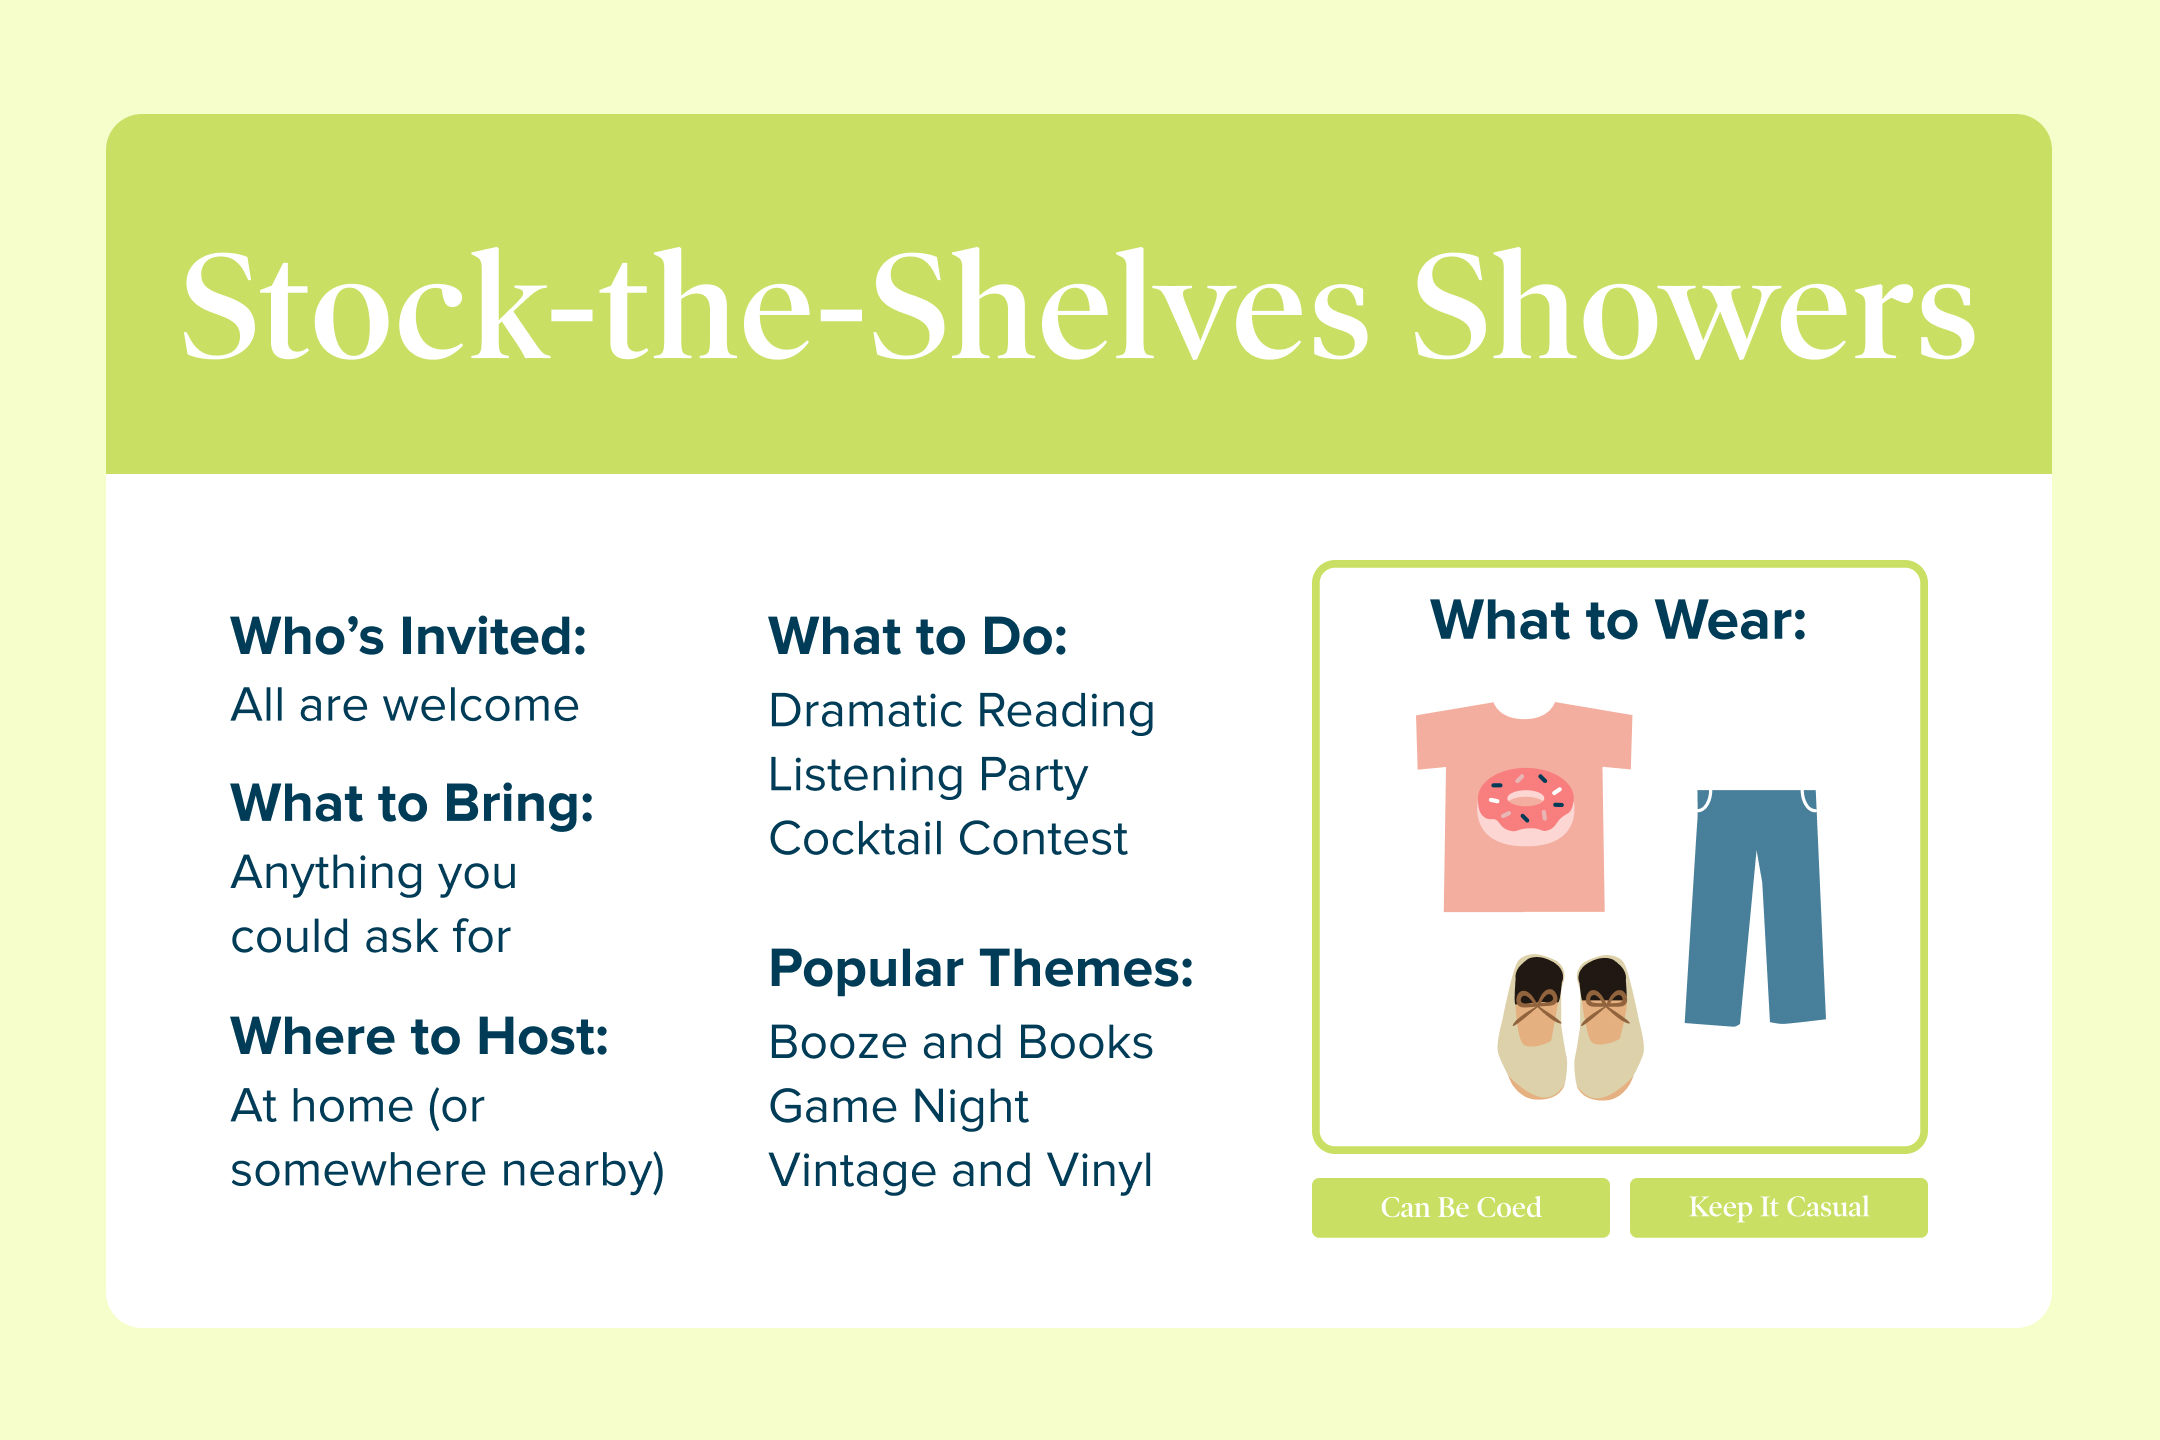 Zola Wedding Shower Styles - Stock-the-Shelves Showers